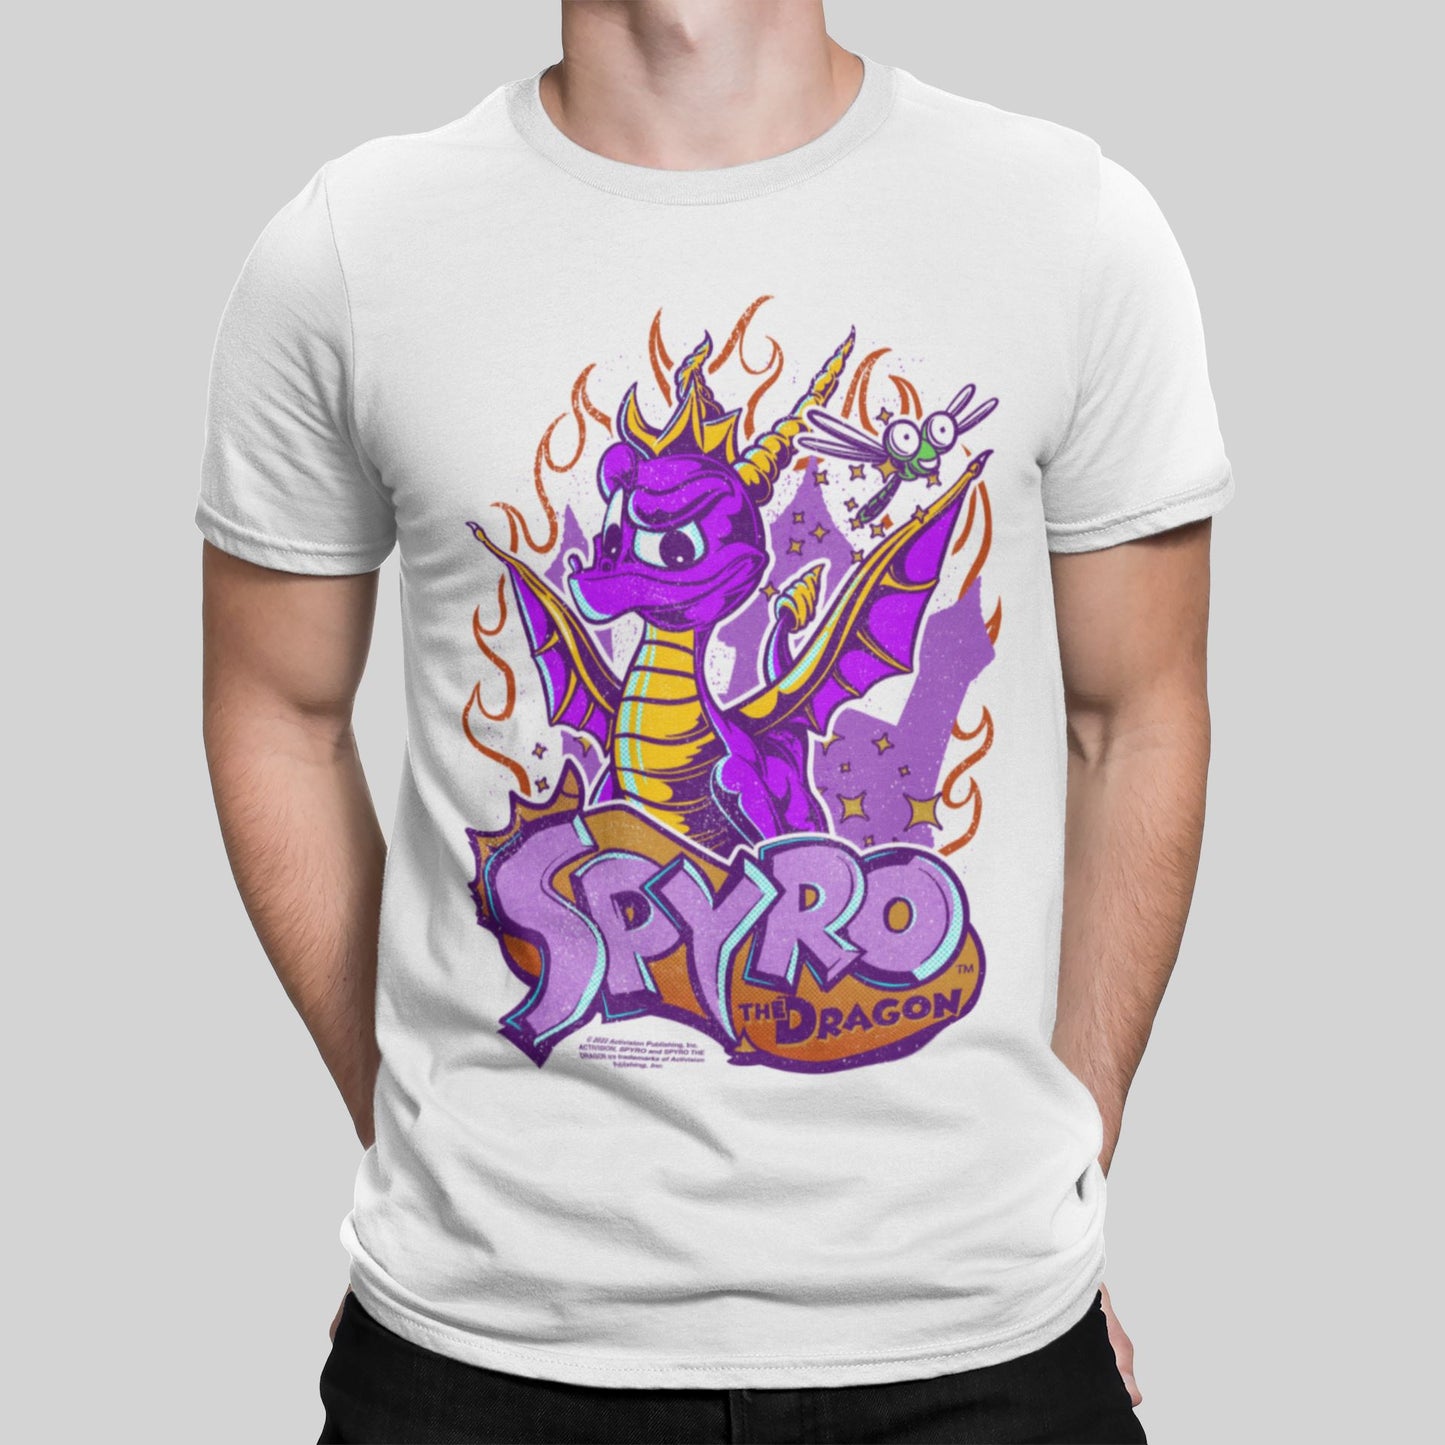 Spyro The Dragon Retro Gaming T-Shirt T-Shirt Seven Squared Small 34-36" White 